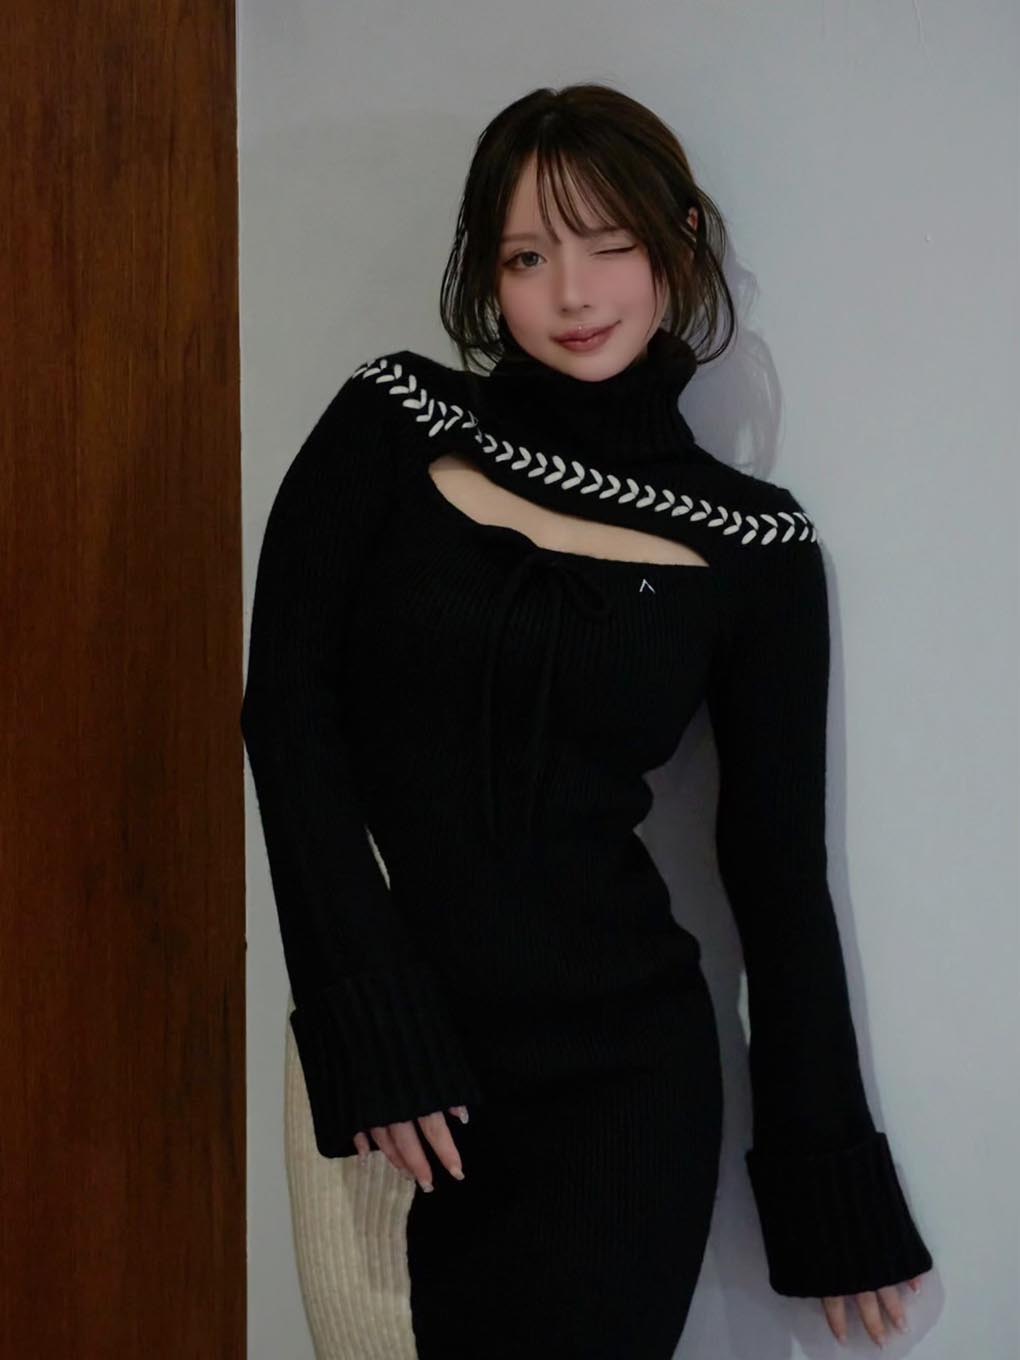 Sophie knit long dress